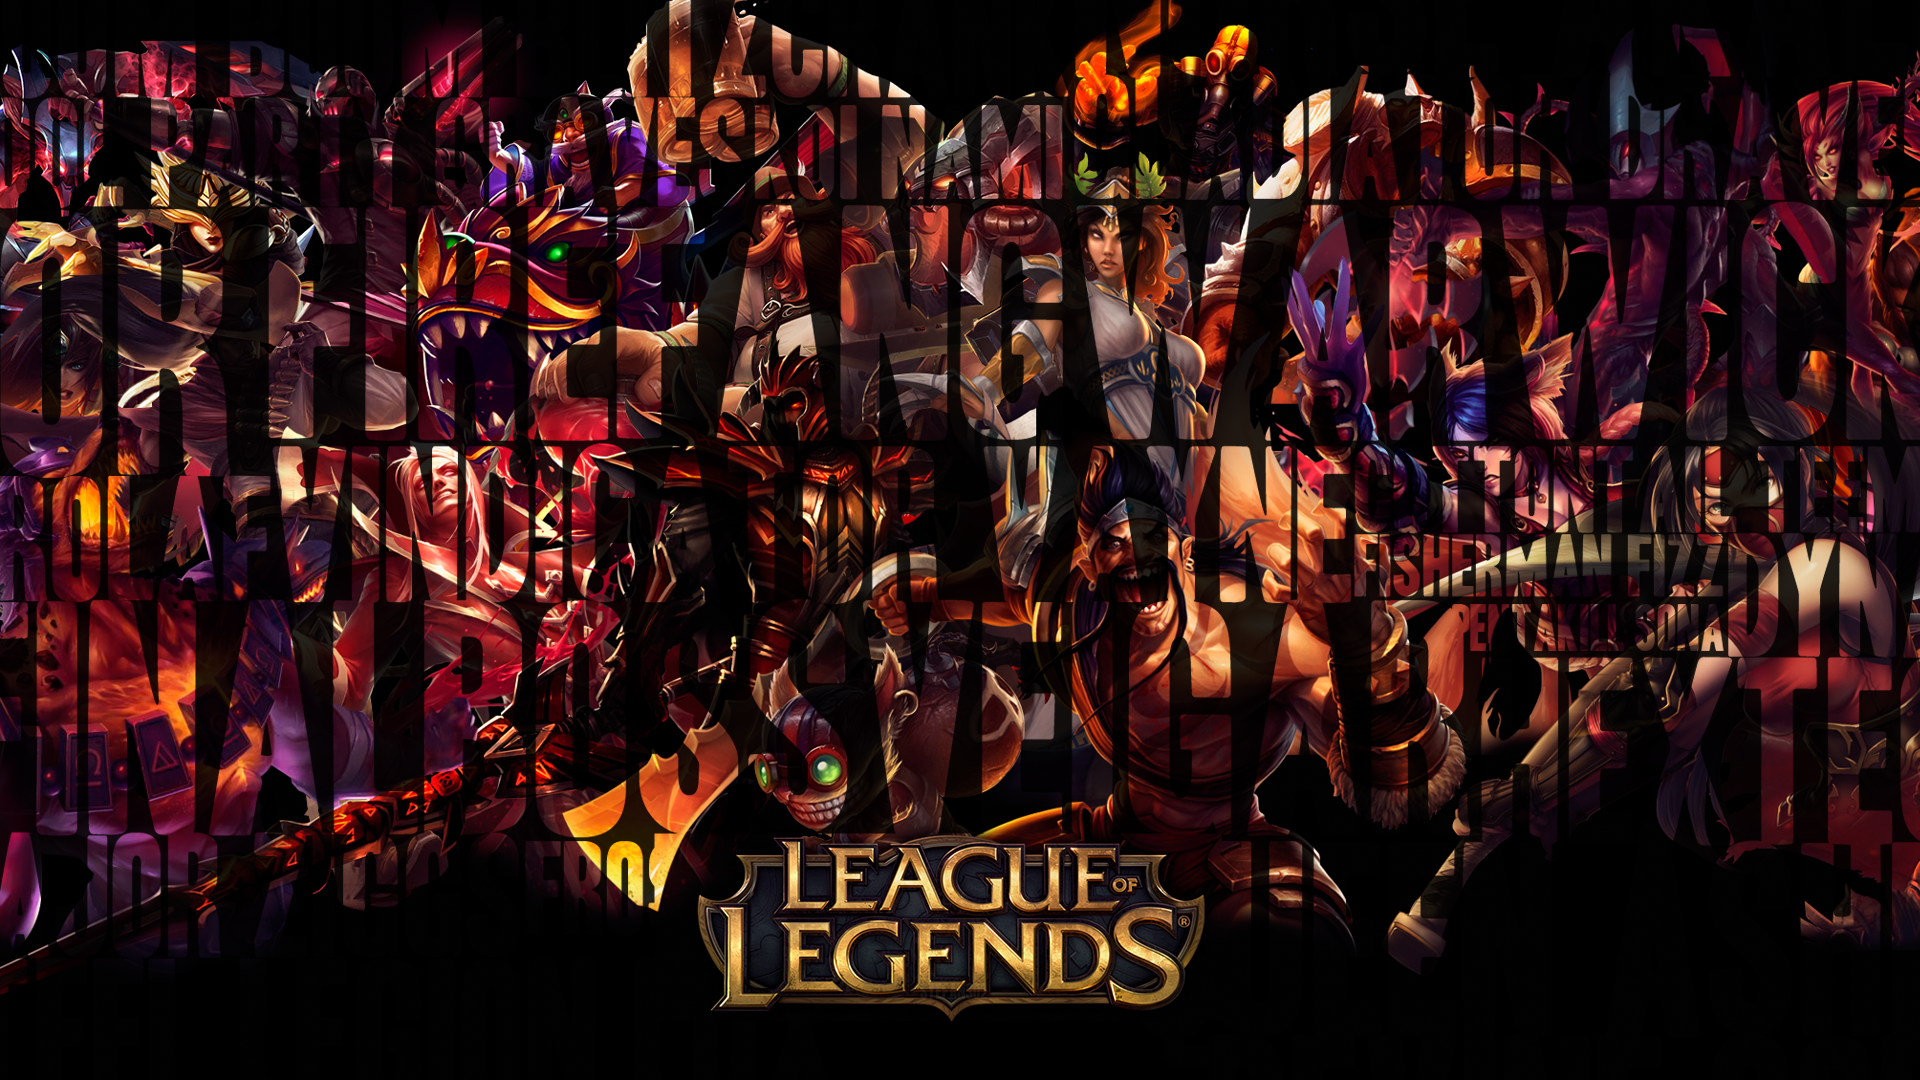 Hd wallpapers league of legends